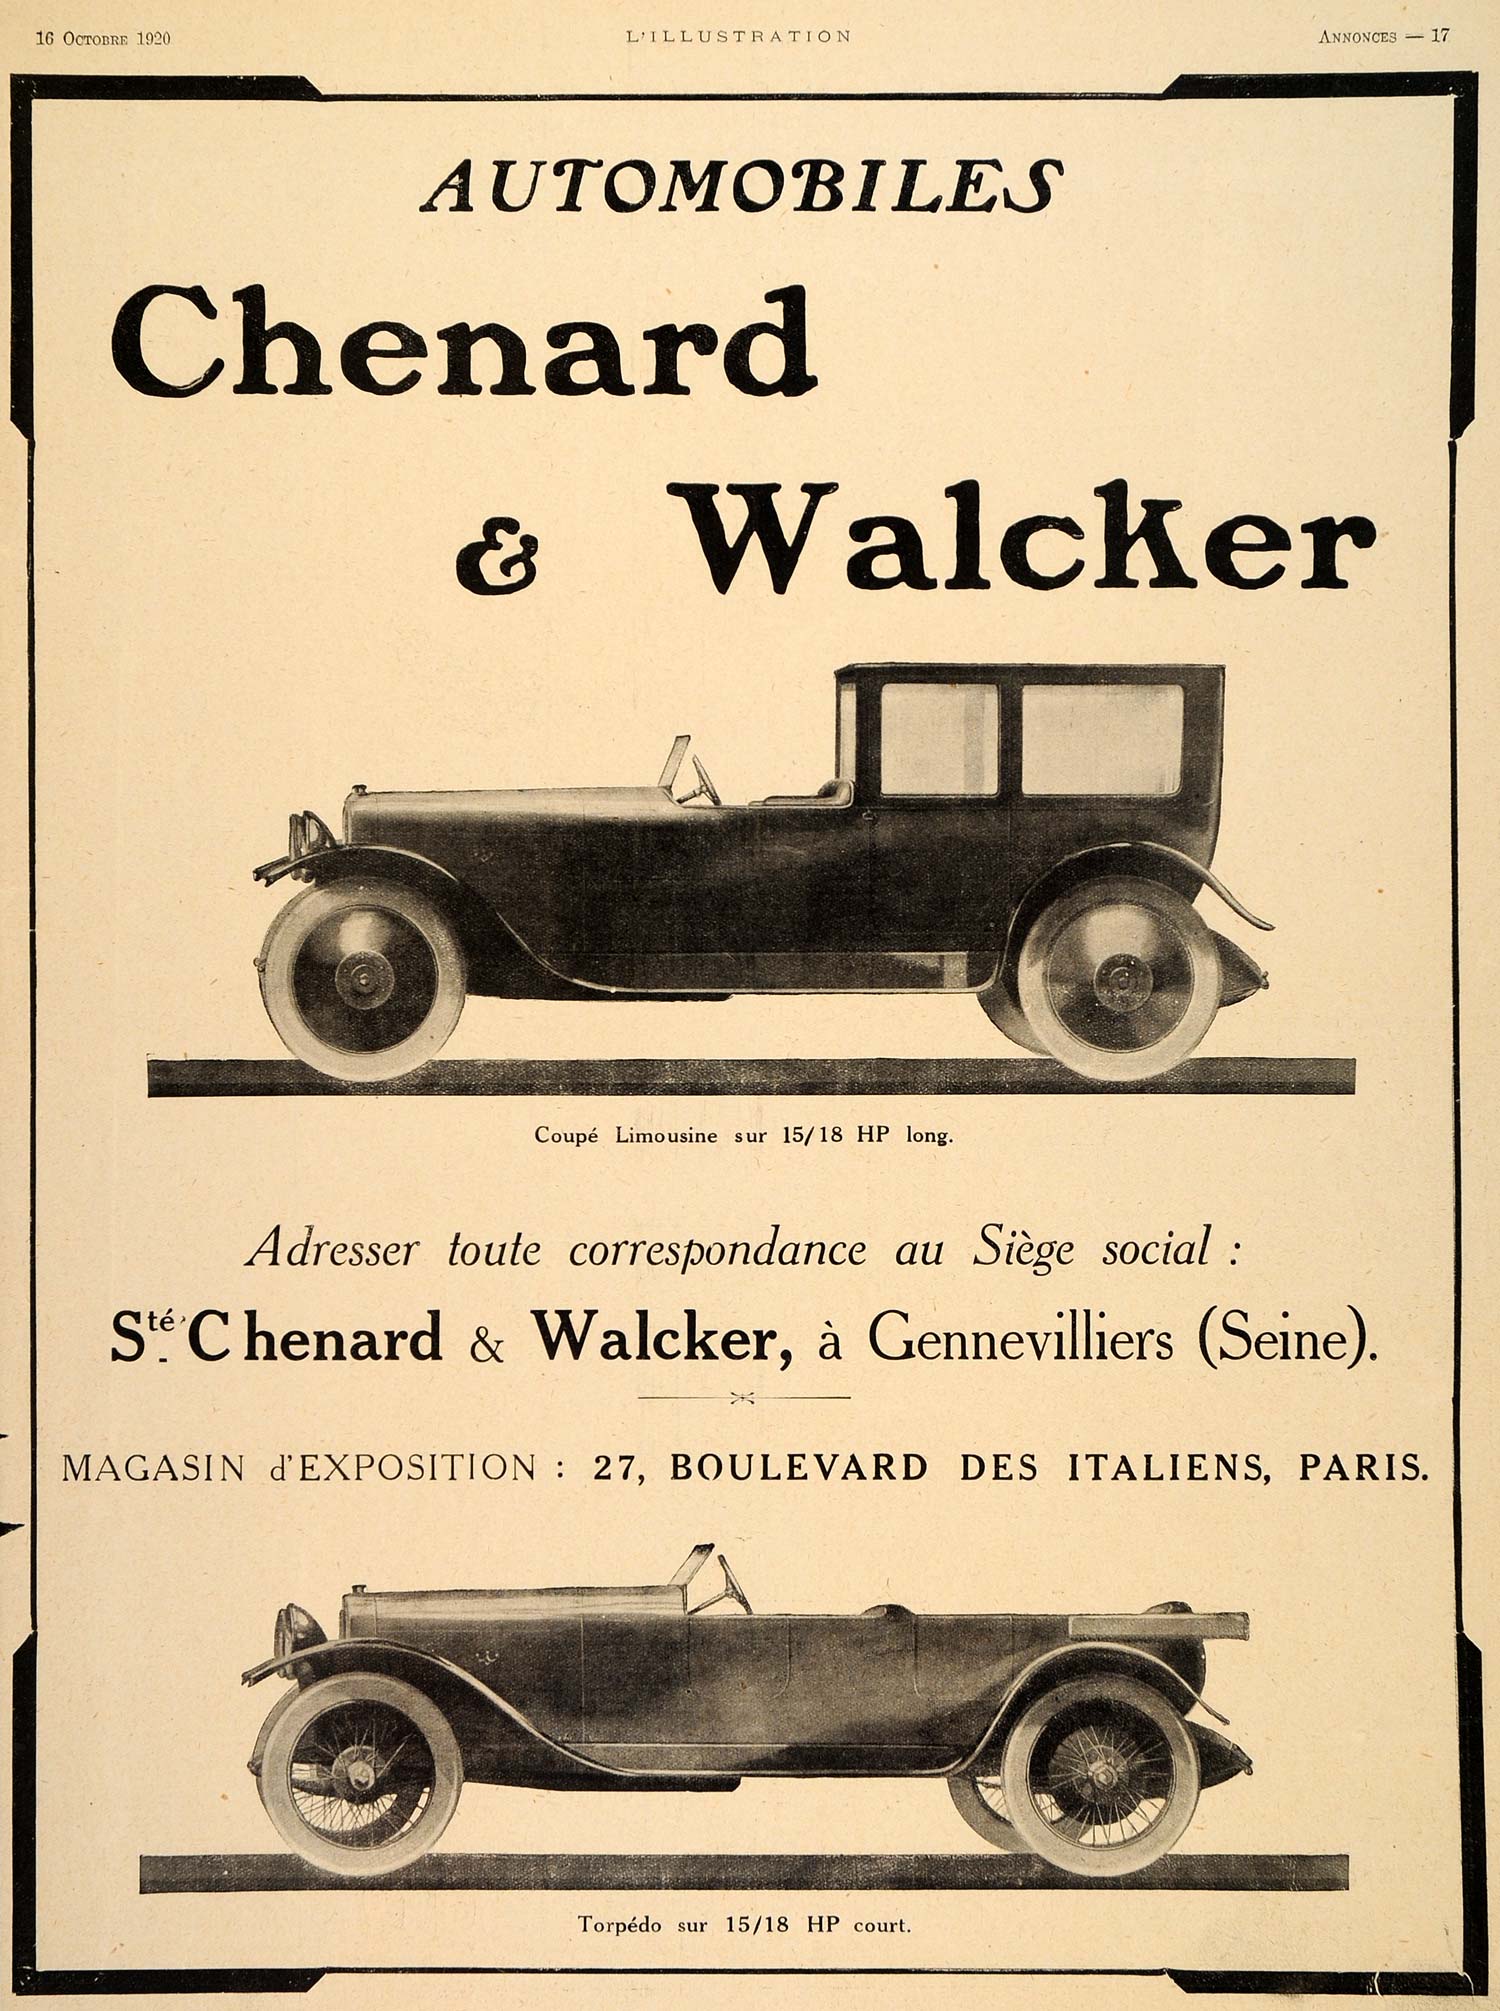 1920 Ad French Automobiles Cars Chenard Walcker Racing - ORIGINAL ILL3